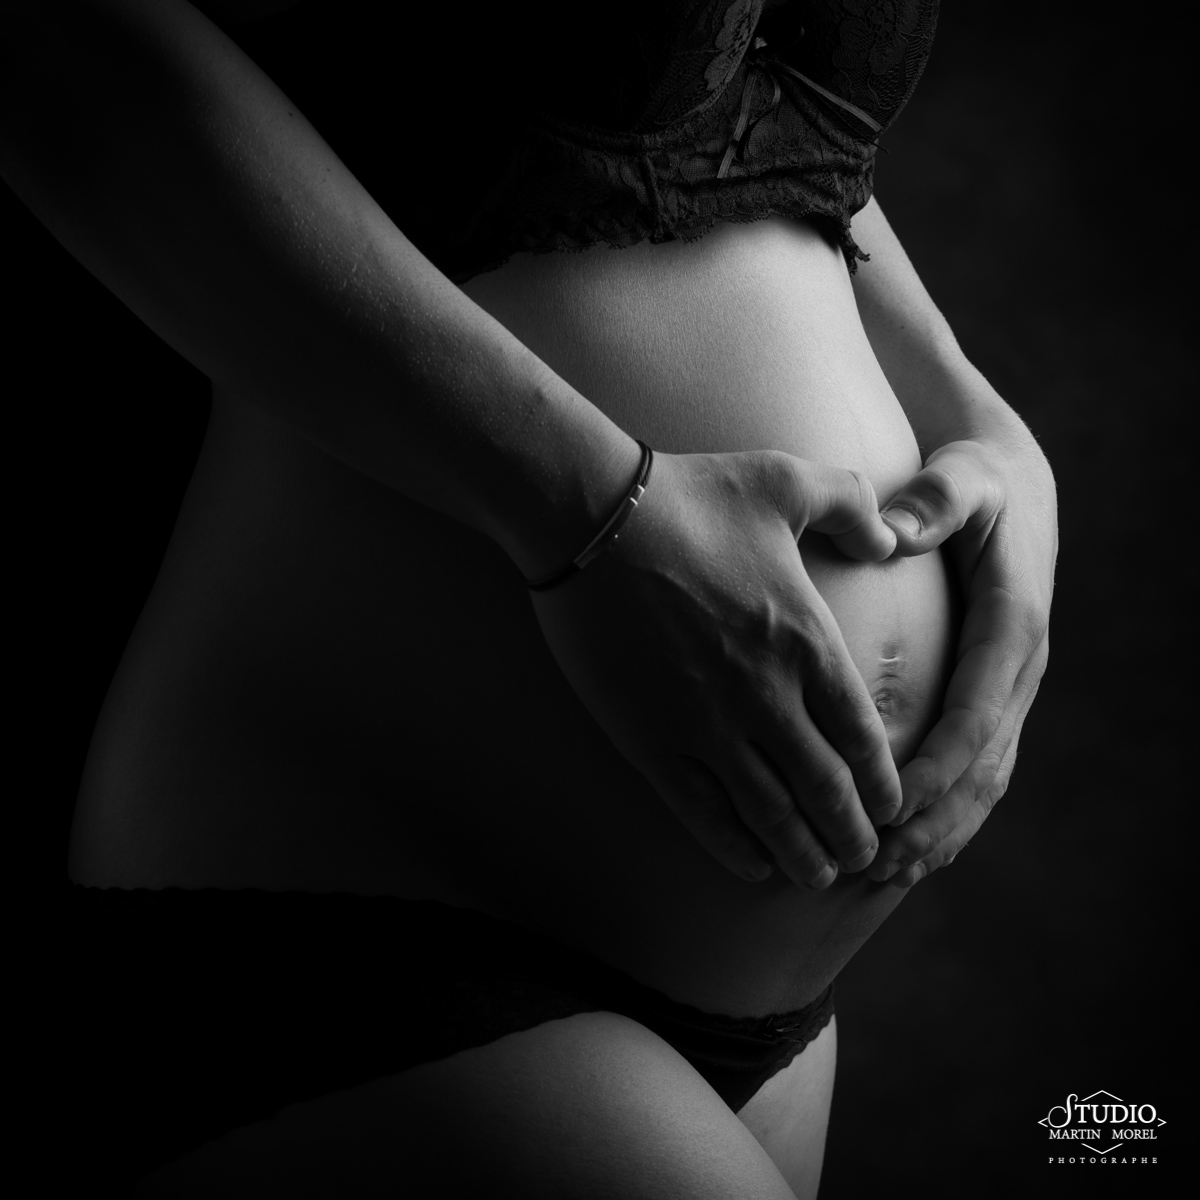 Séance photo de grossesse en studio - Studio Martin Morel